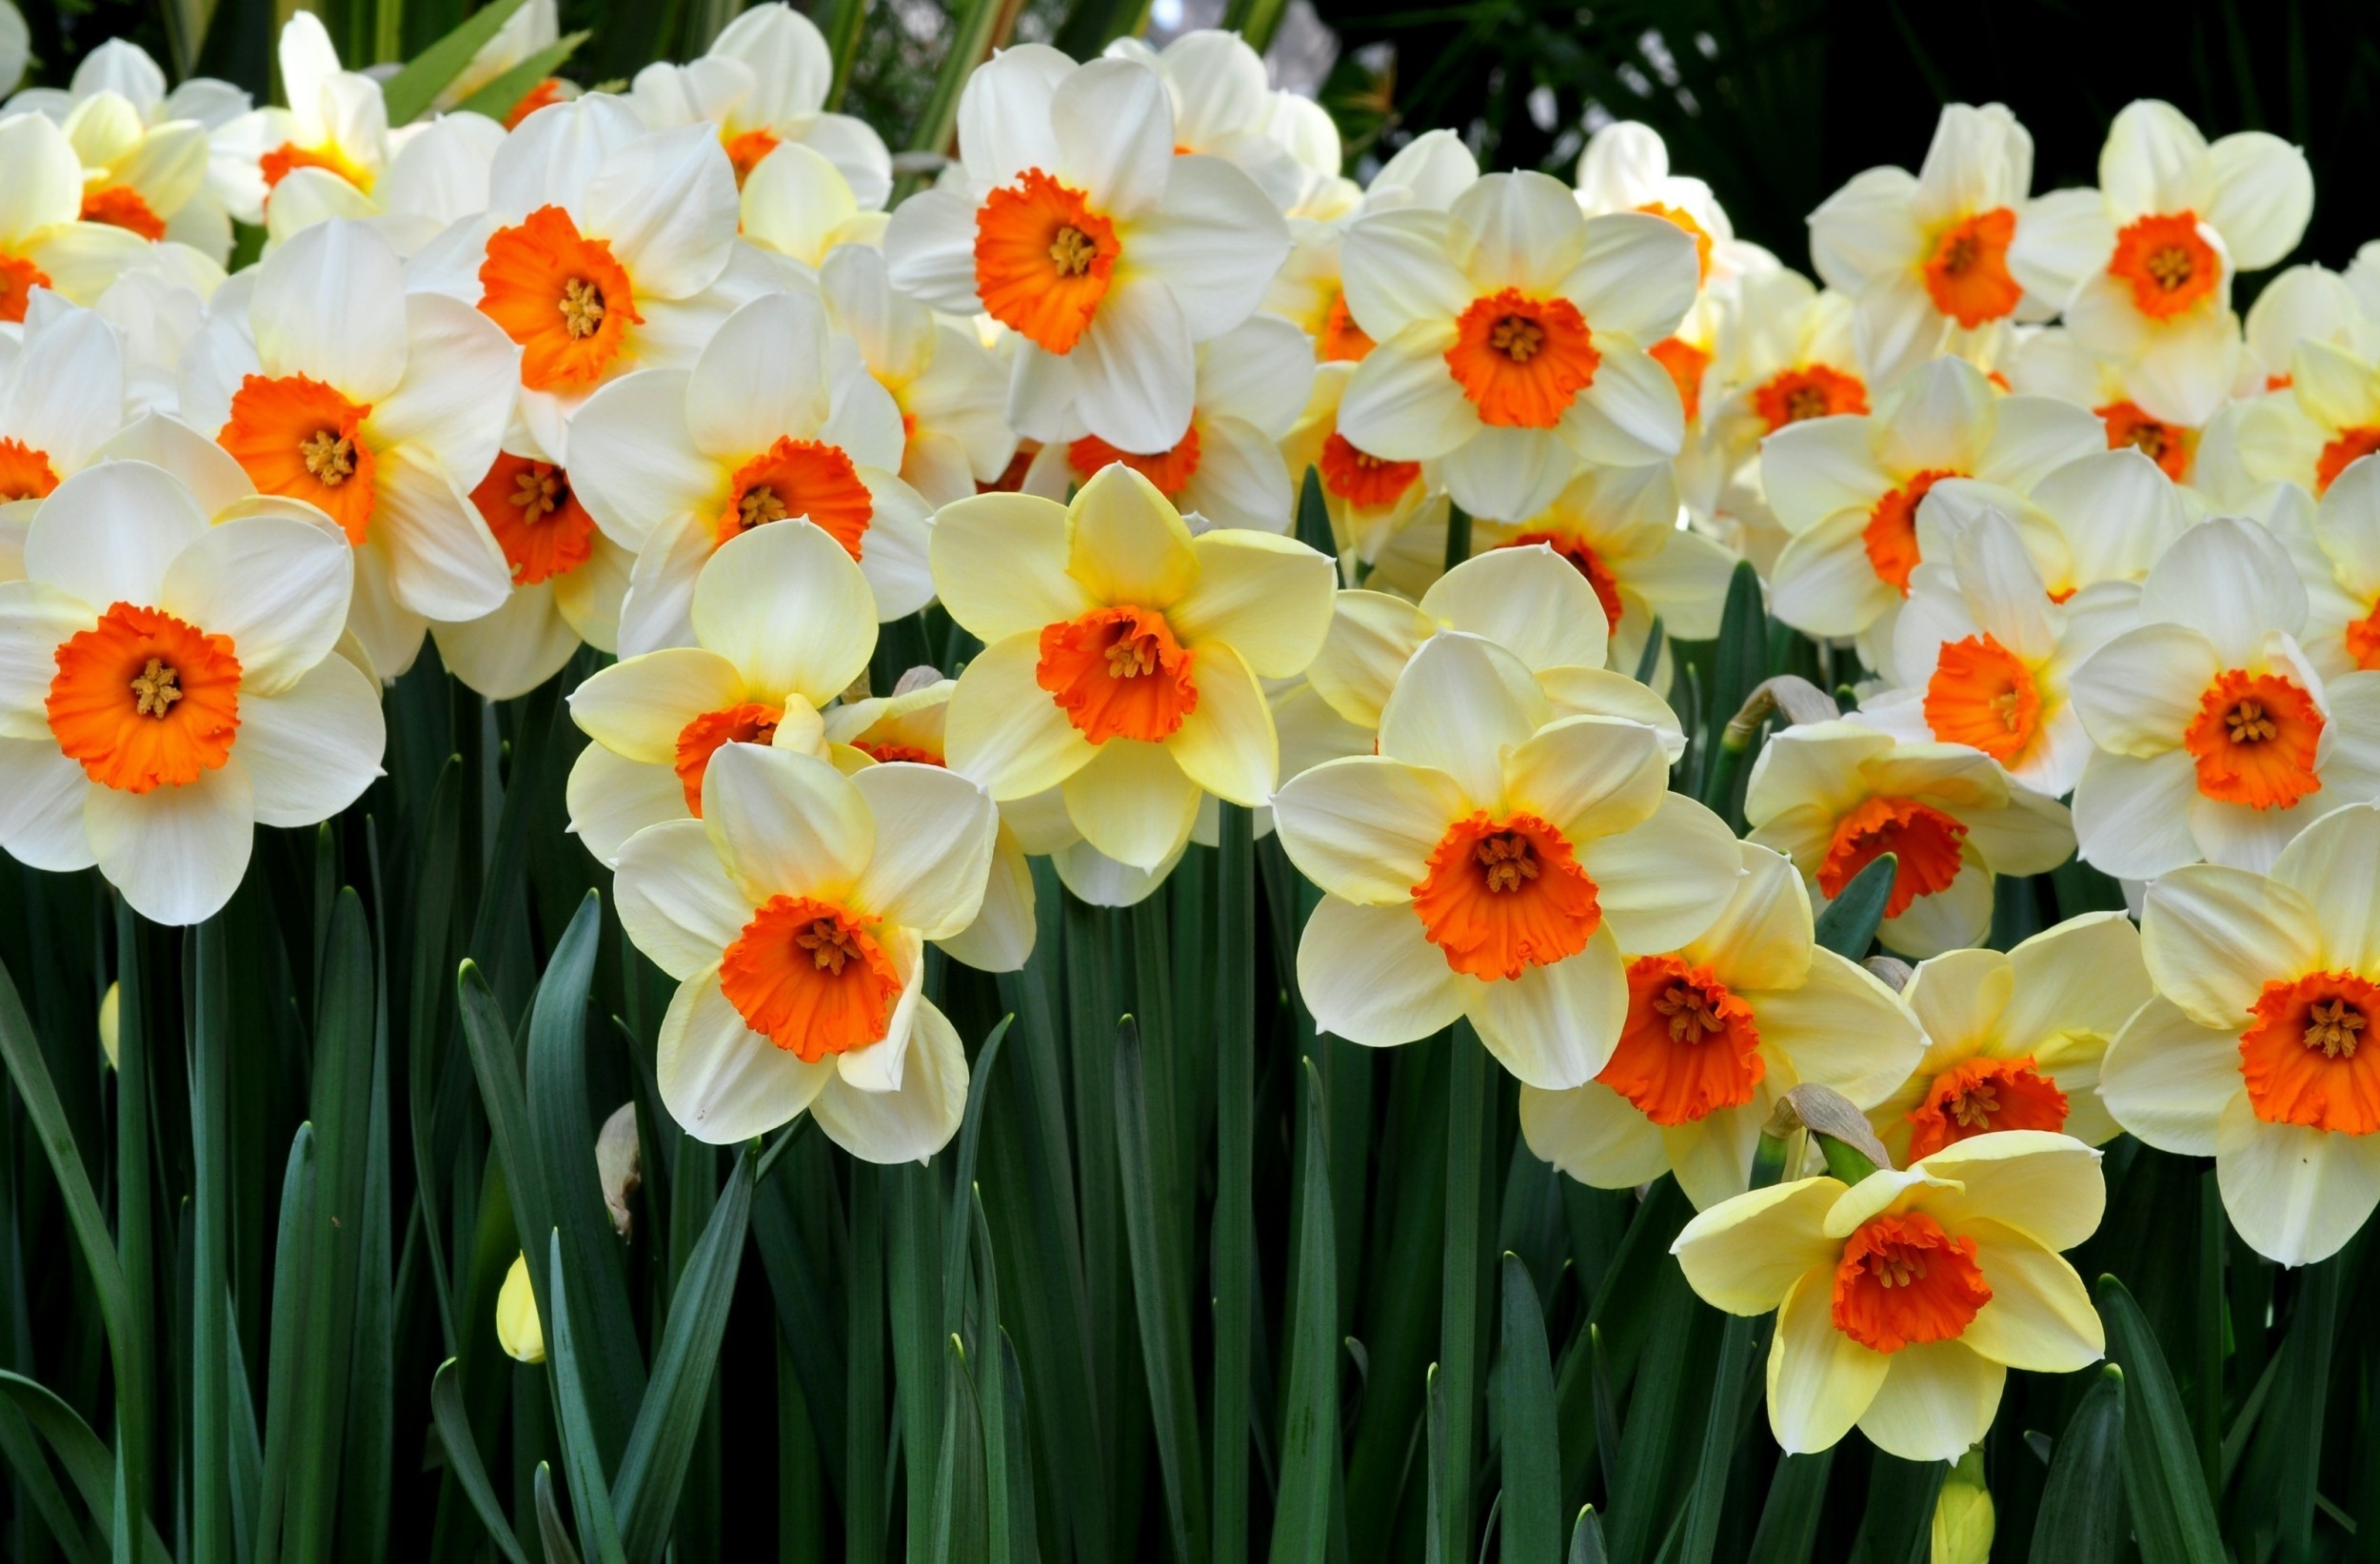 Earth Daffodil HD Wallpaper | Background Image